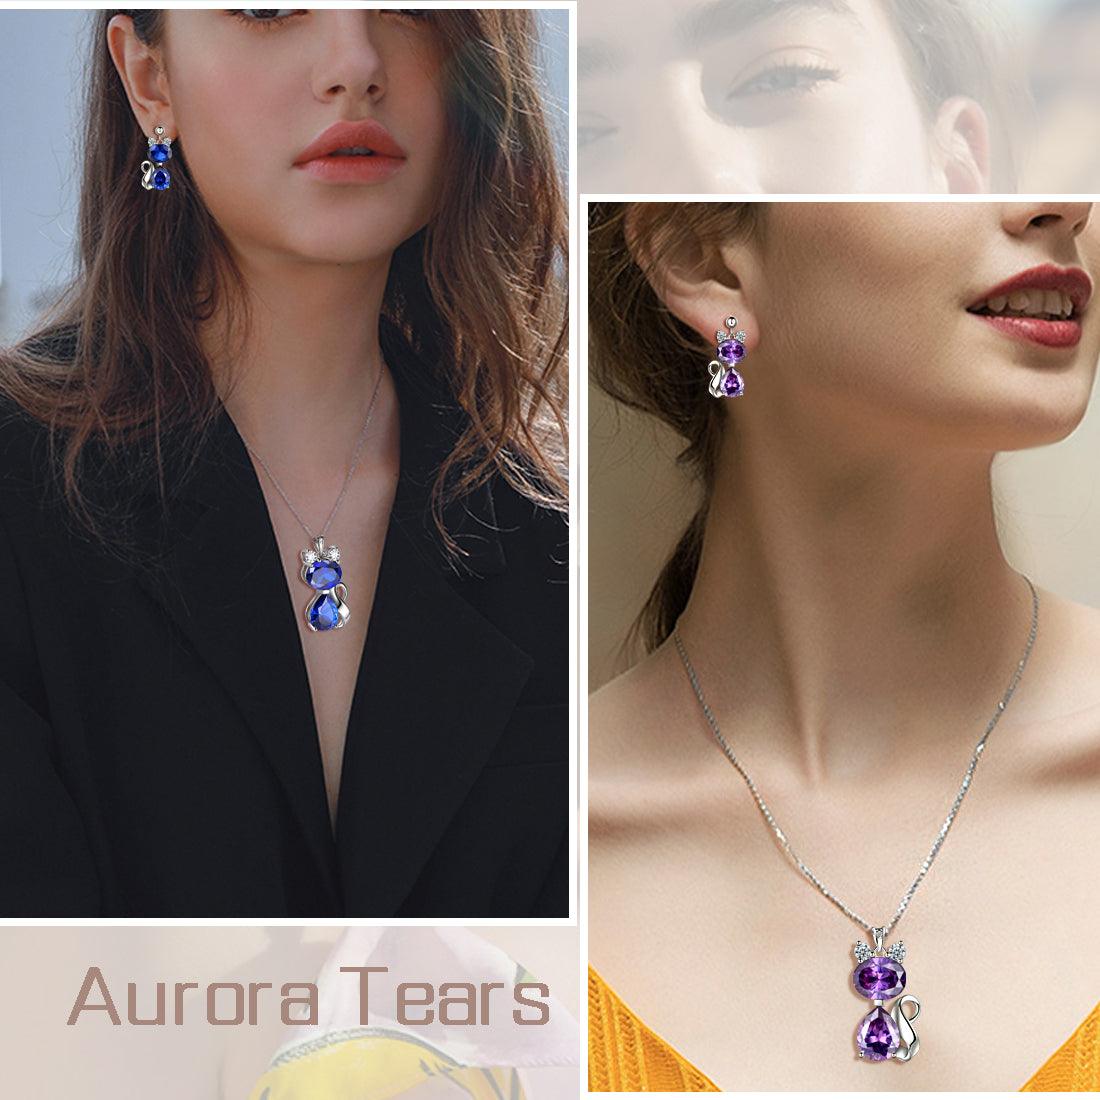 Cat Birthstone February Amethyst Necklace Earring Jewelry Set - Jewelry Set - Aurora Tears